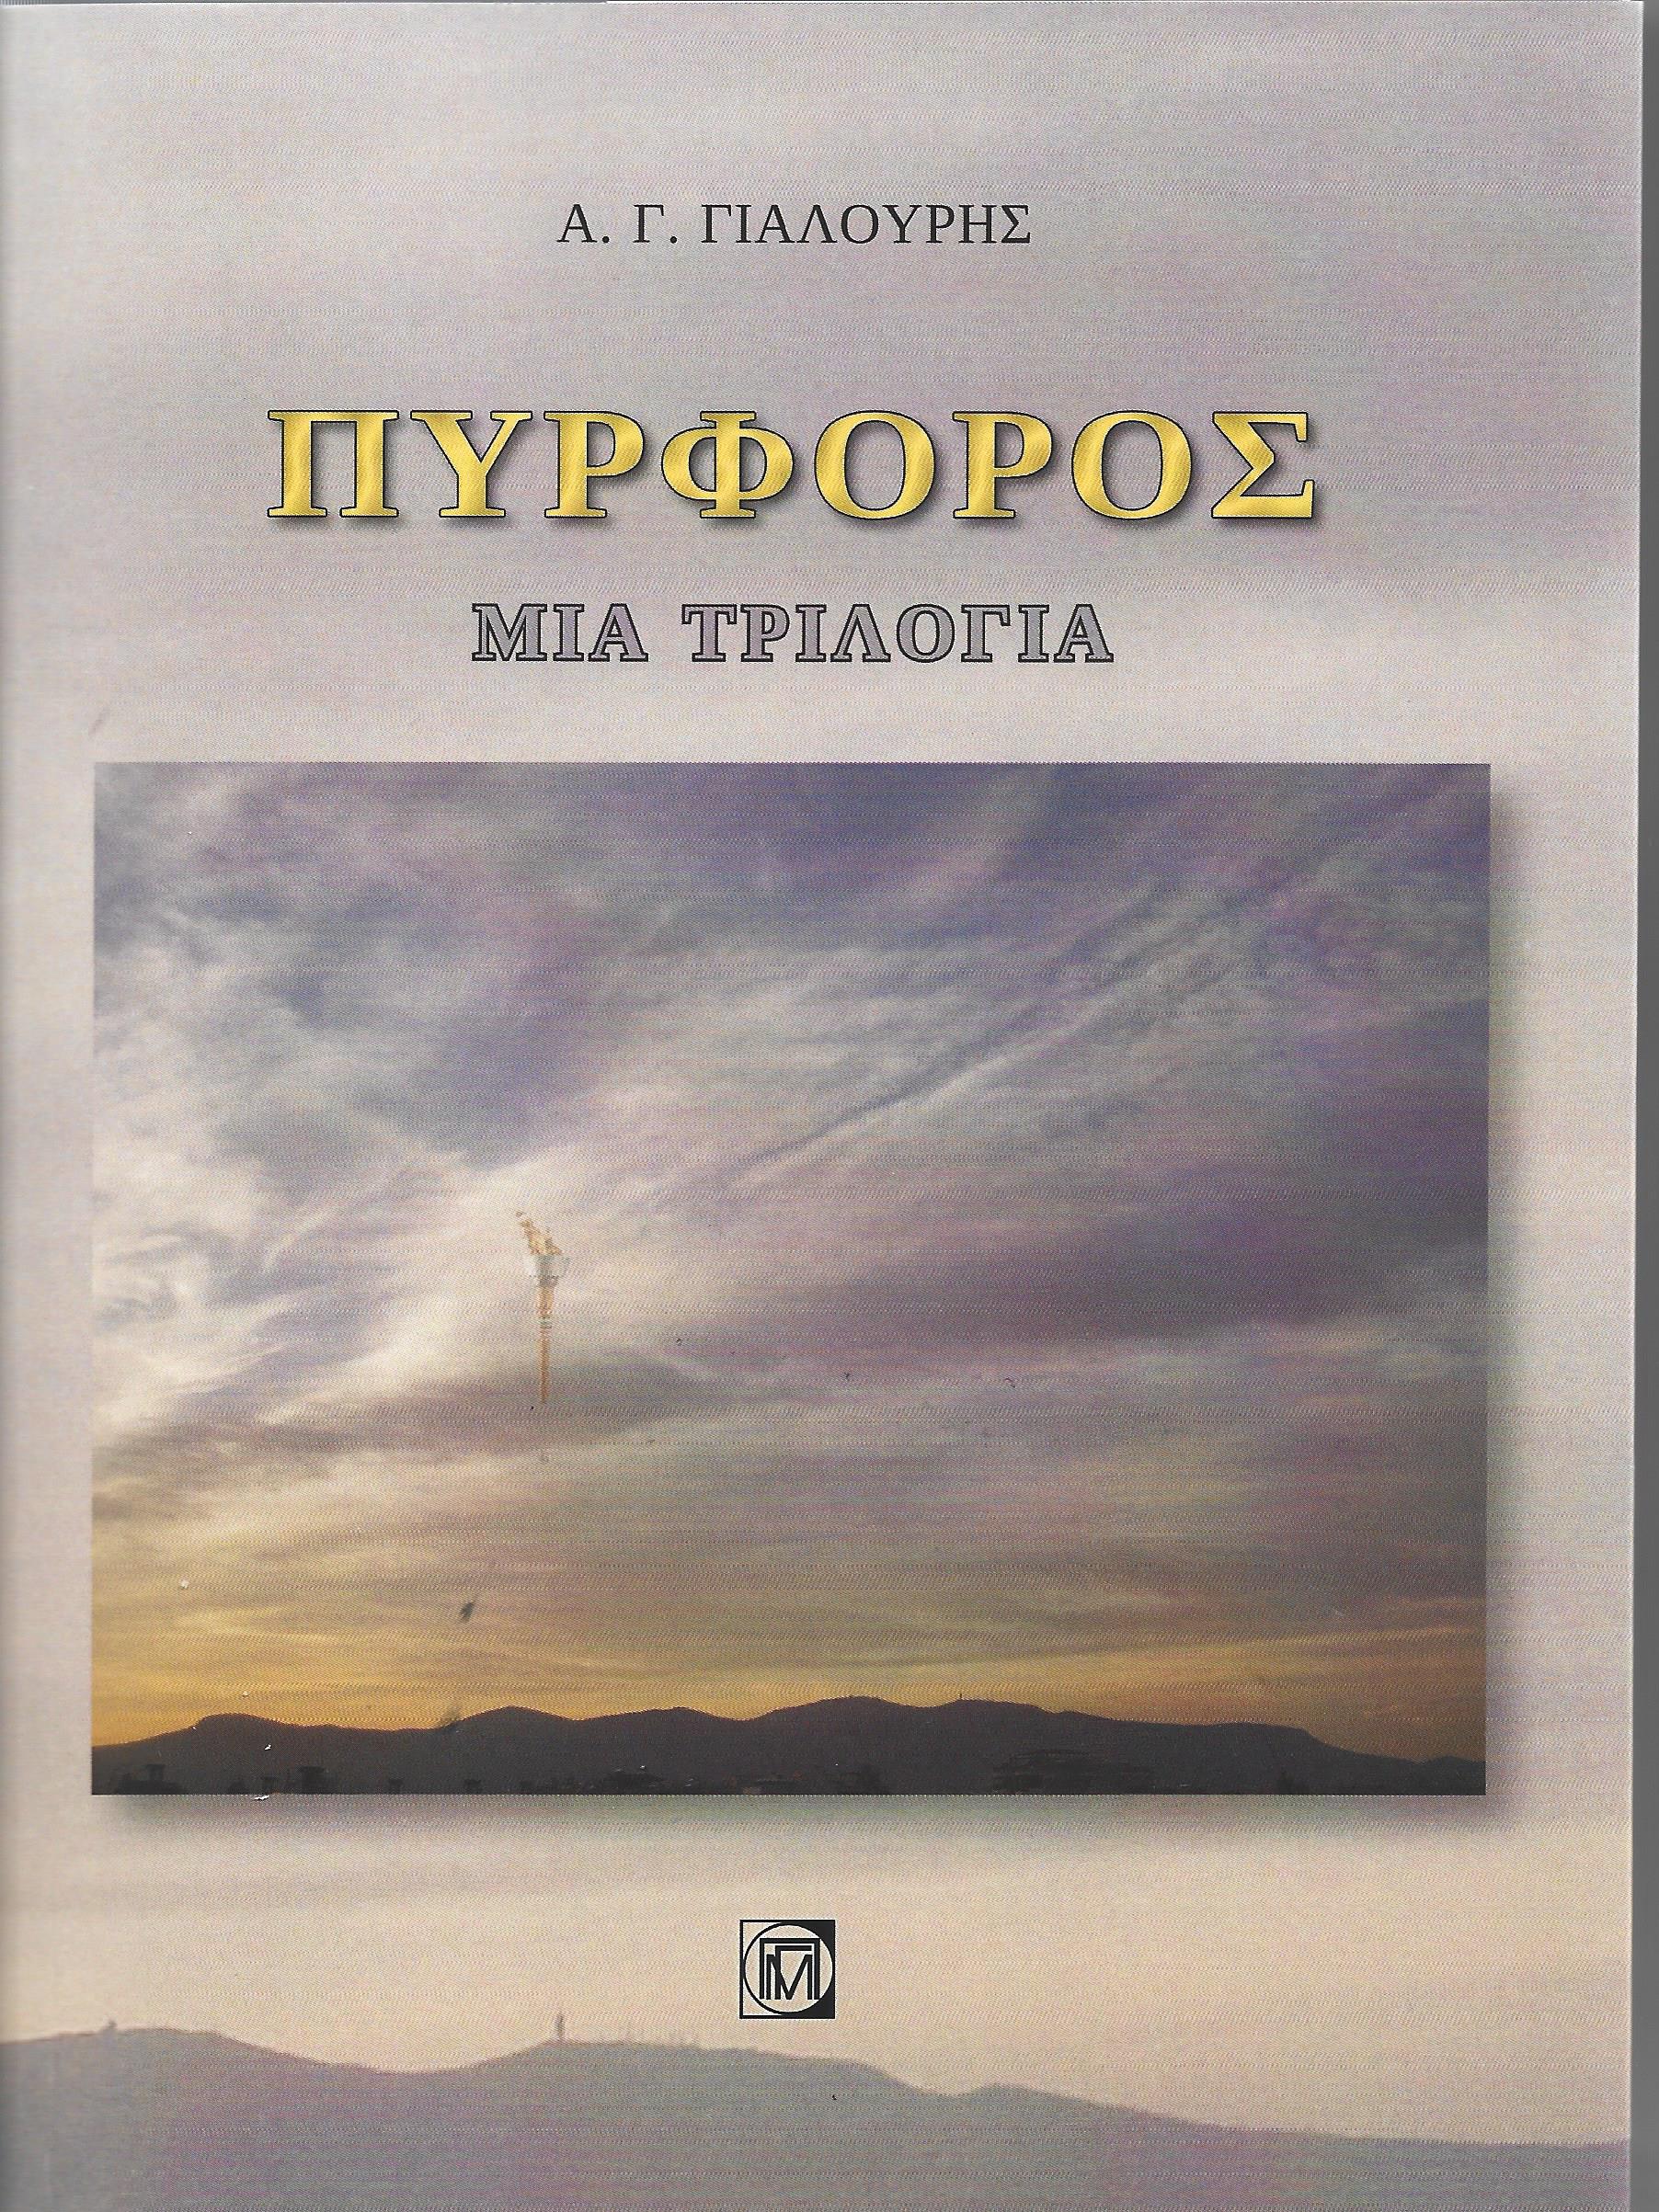 You are currently viewing Κώστας Καστανάς: Α. Γ. Γιαλούρης, Πυρφόρος, εκδ. Παρισιάνου